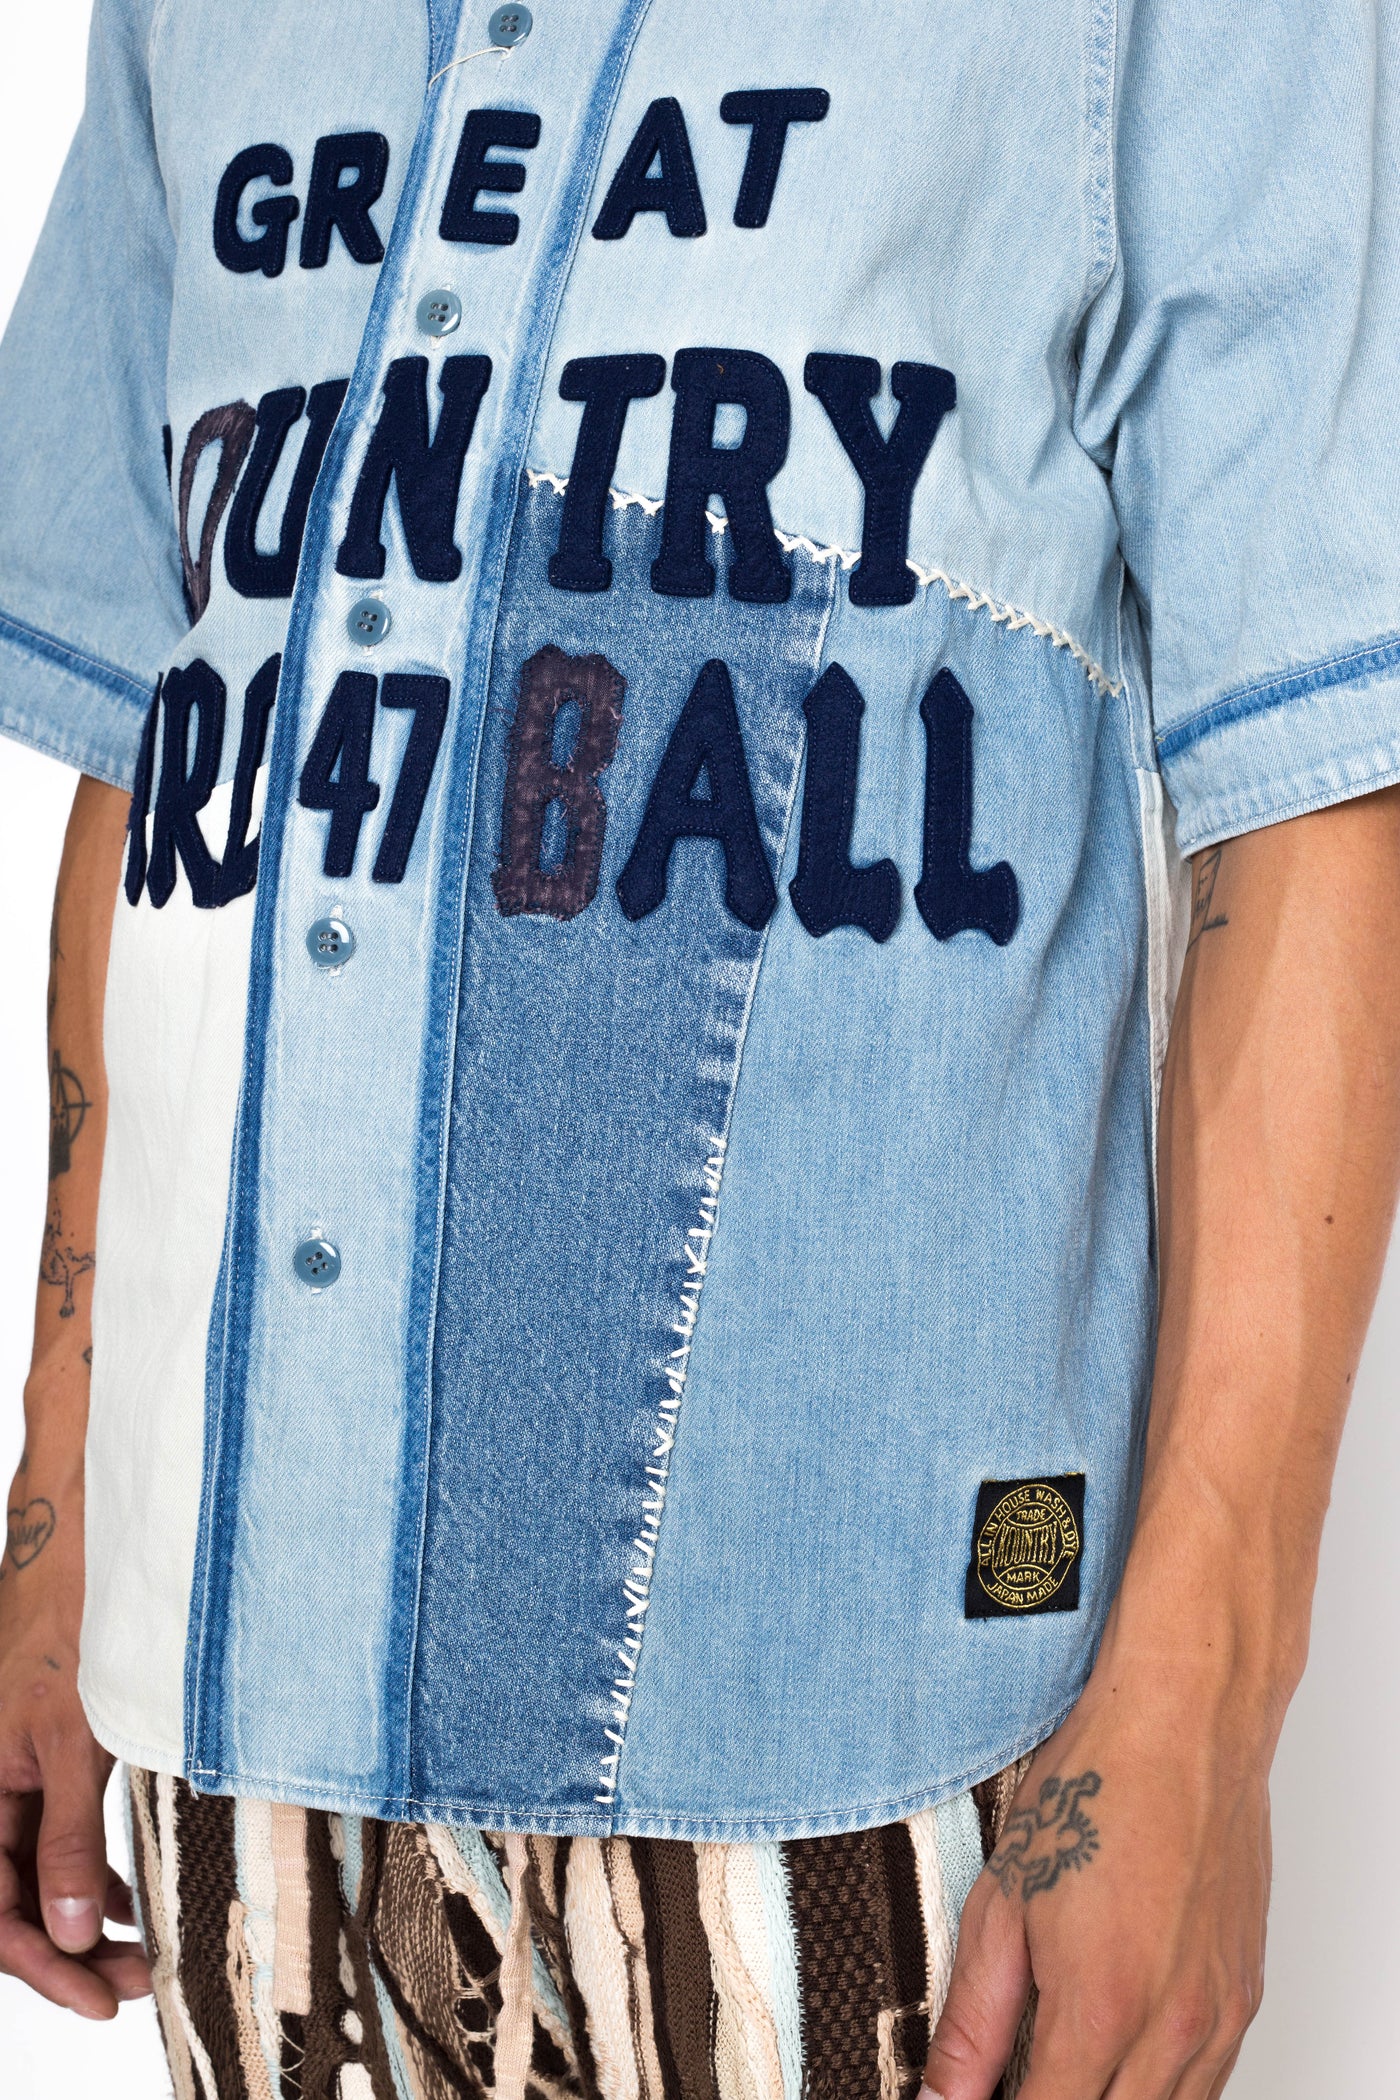 Kapital Great Kountry Baseball Shirt